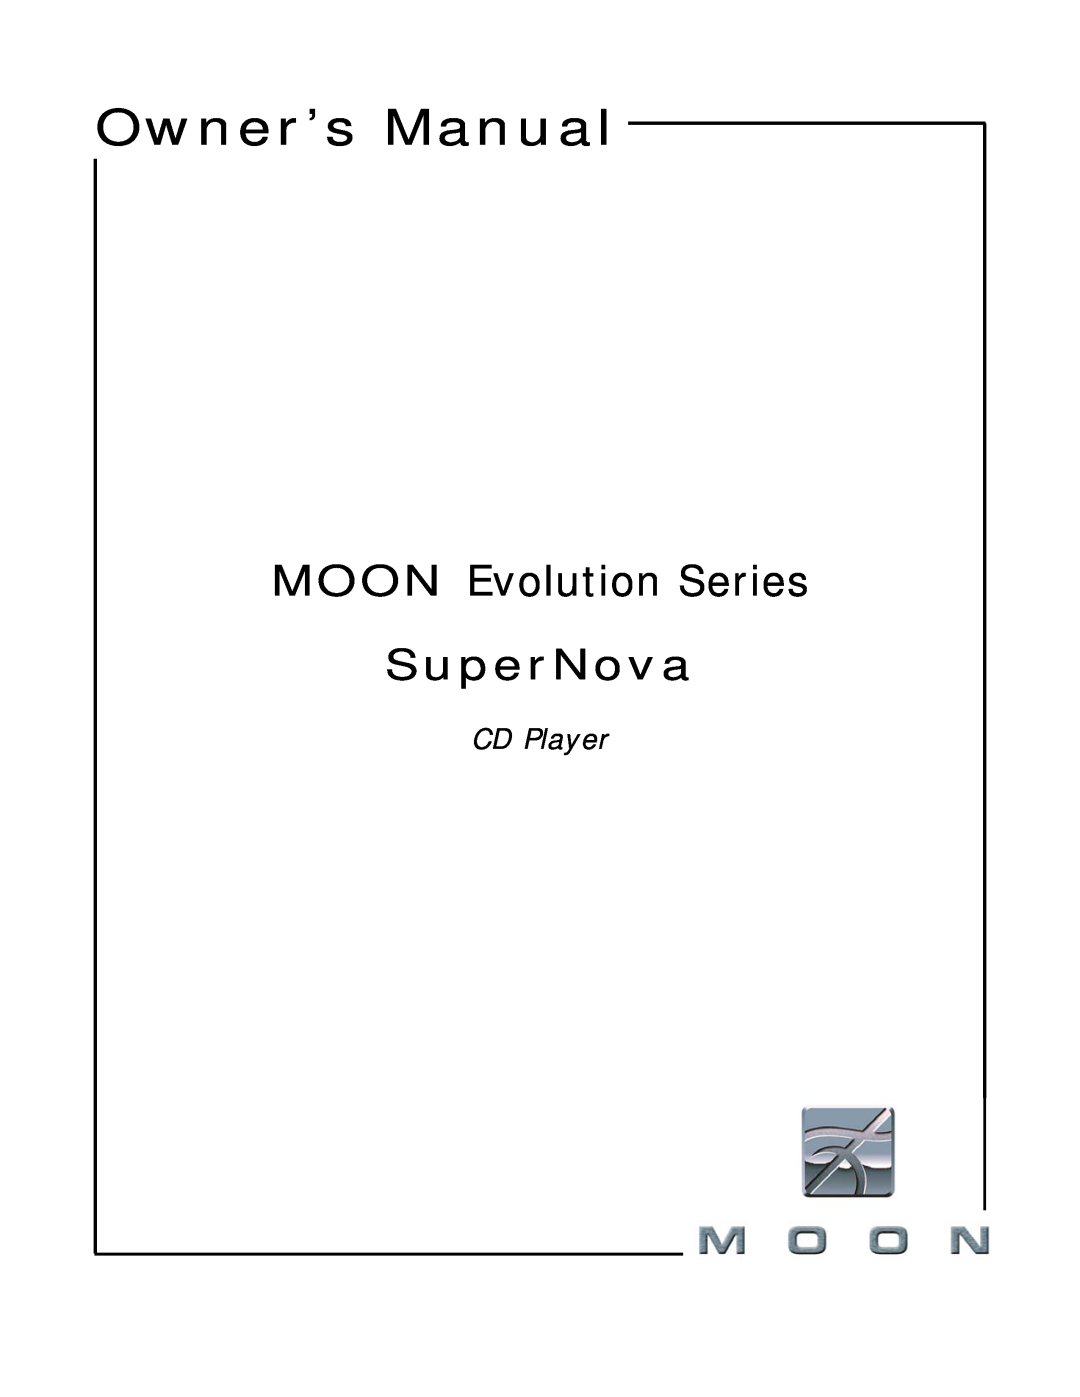 Simaudio SuperNova CD Player owner manual MOON Evolution Series SuperNova 